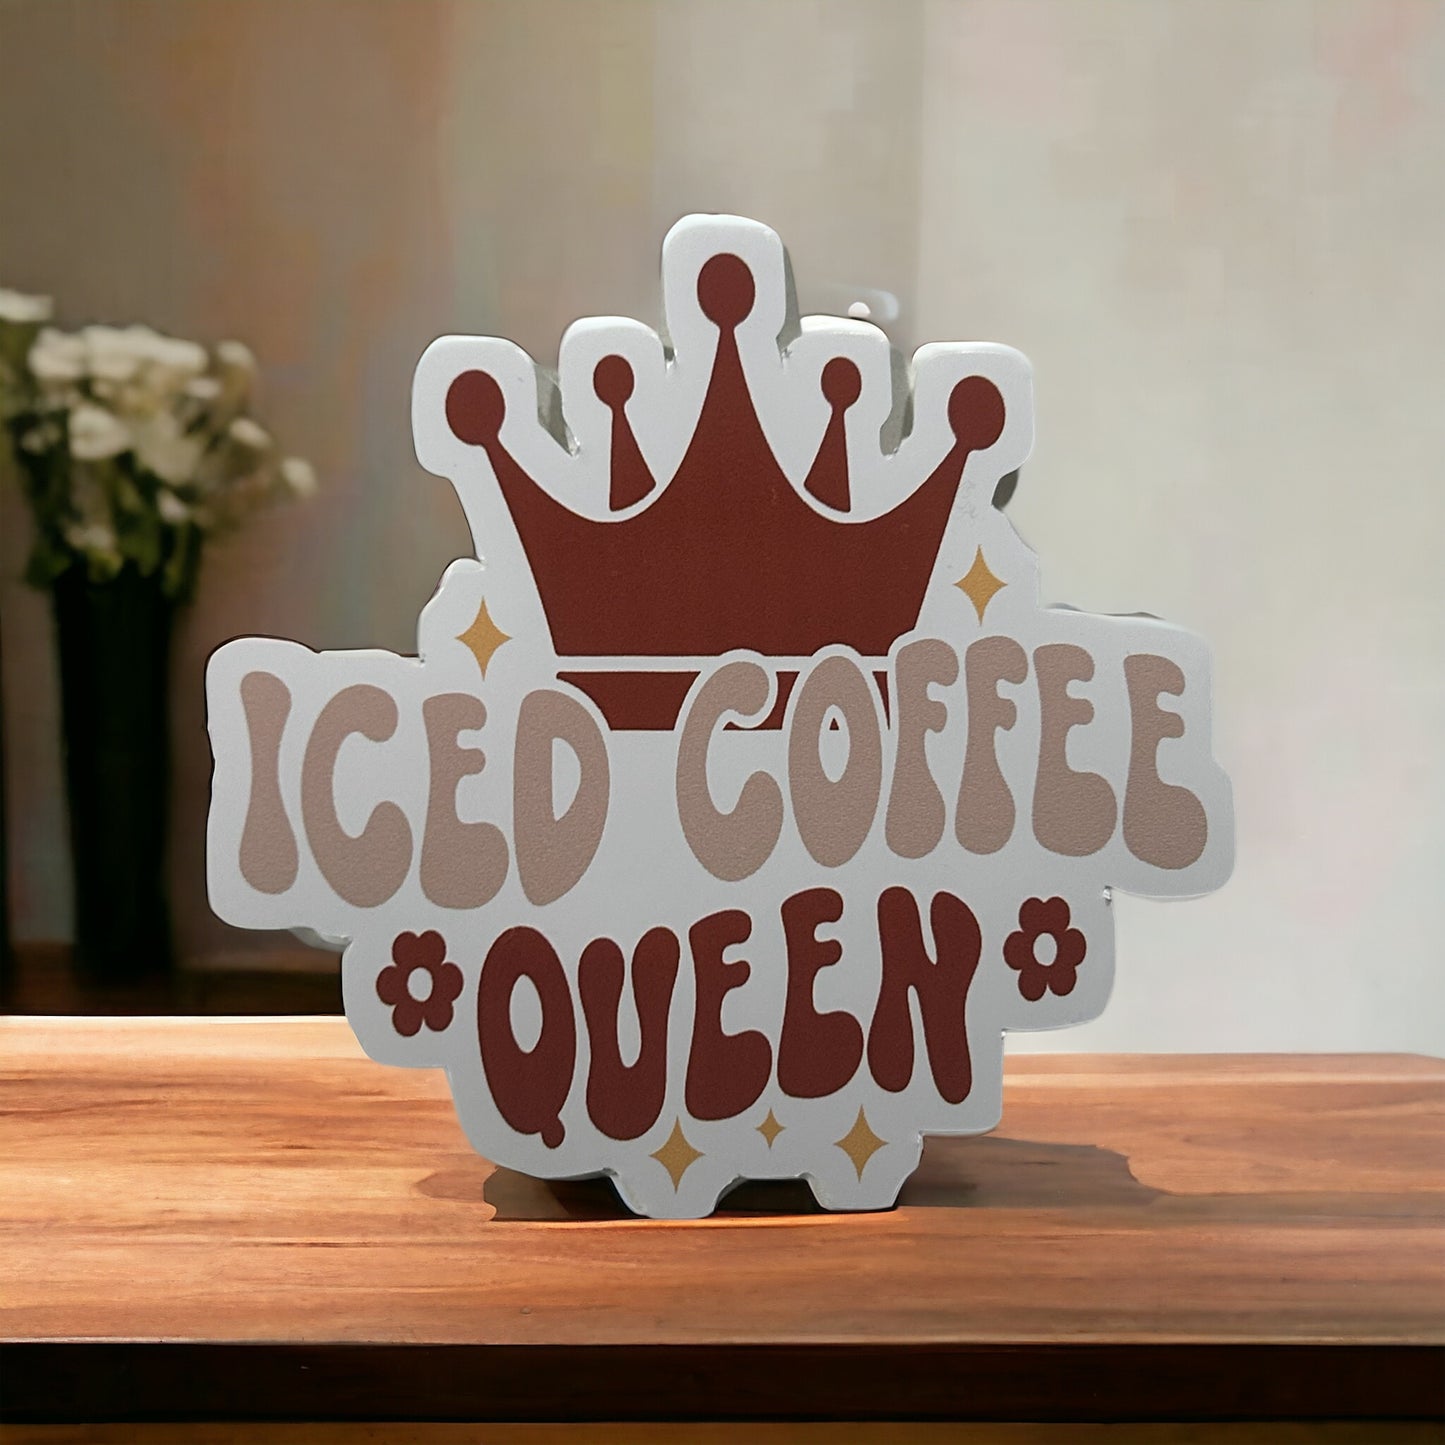 Iced Coffee Queen Sticker